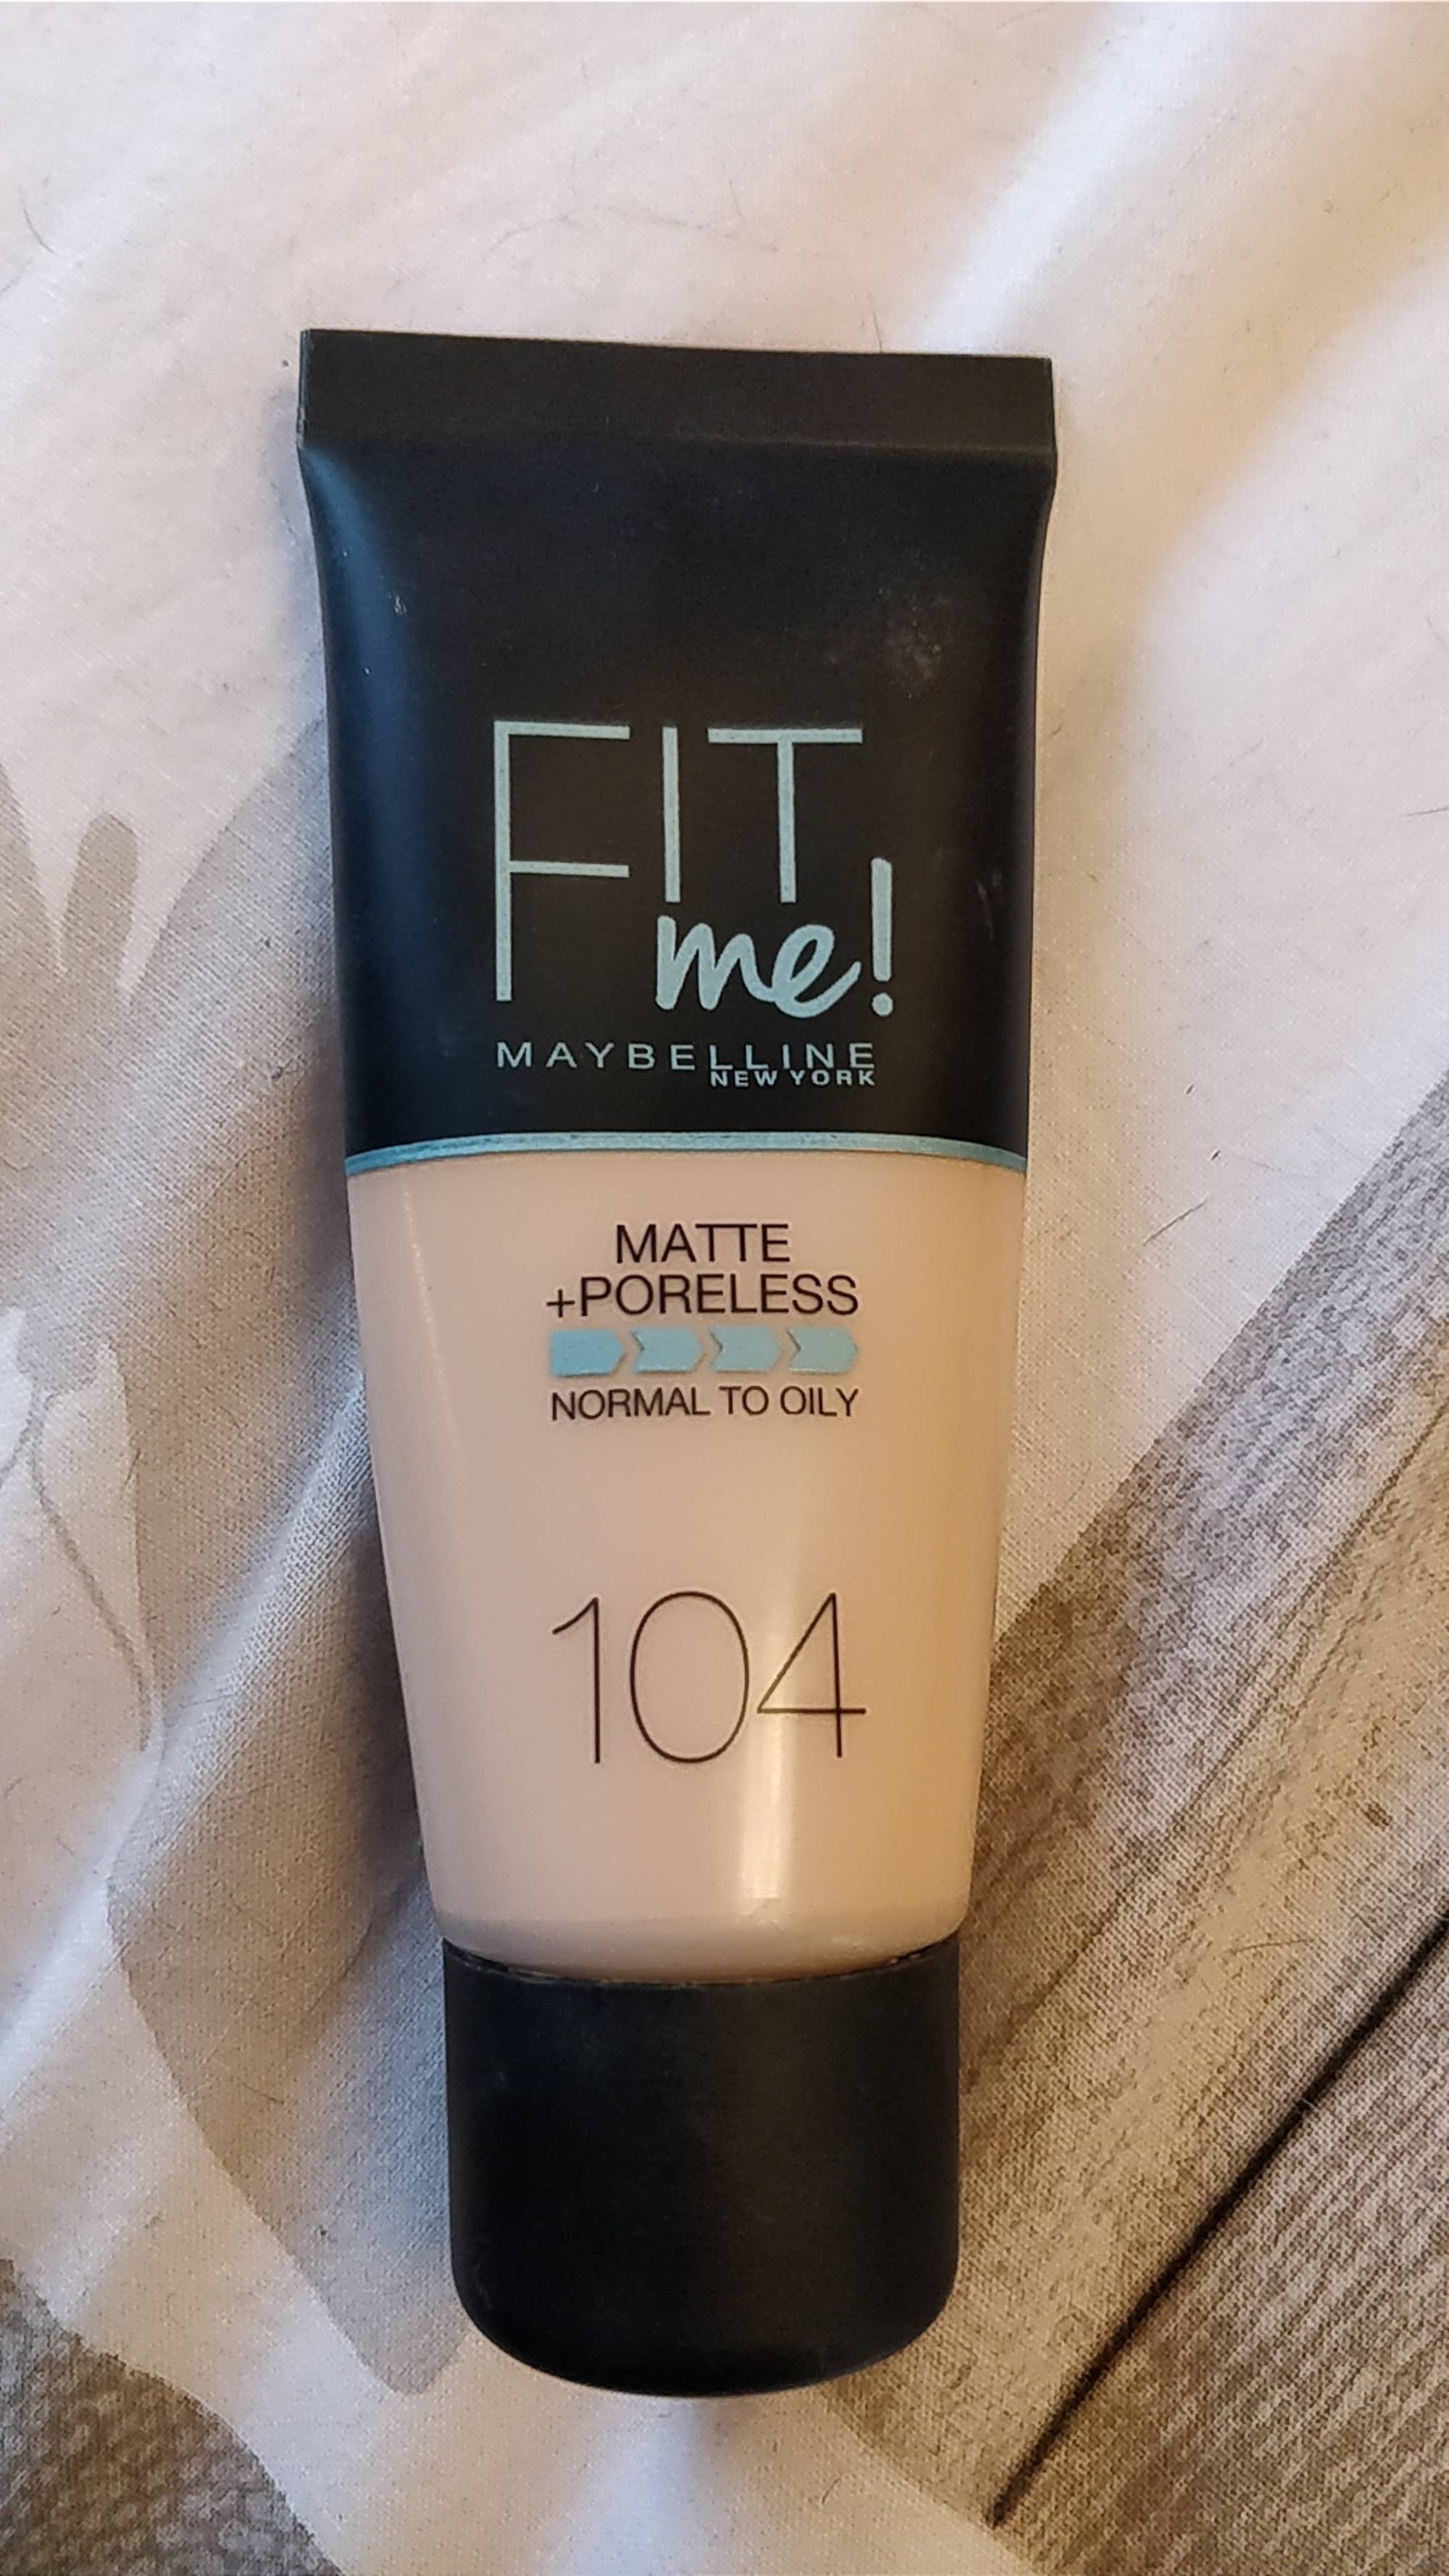 MAYBELLINE - Fit me! - Matte+poreless 104